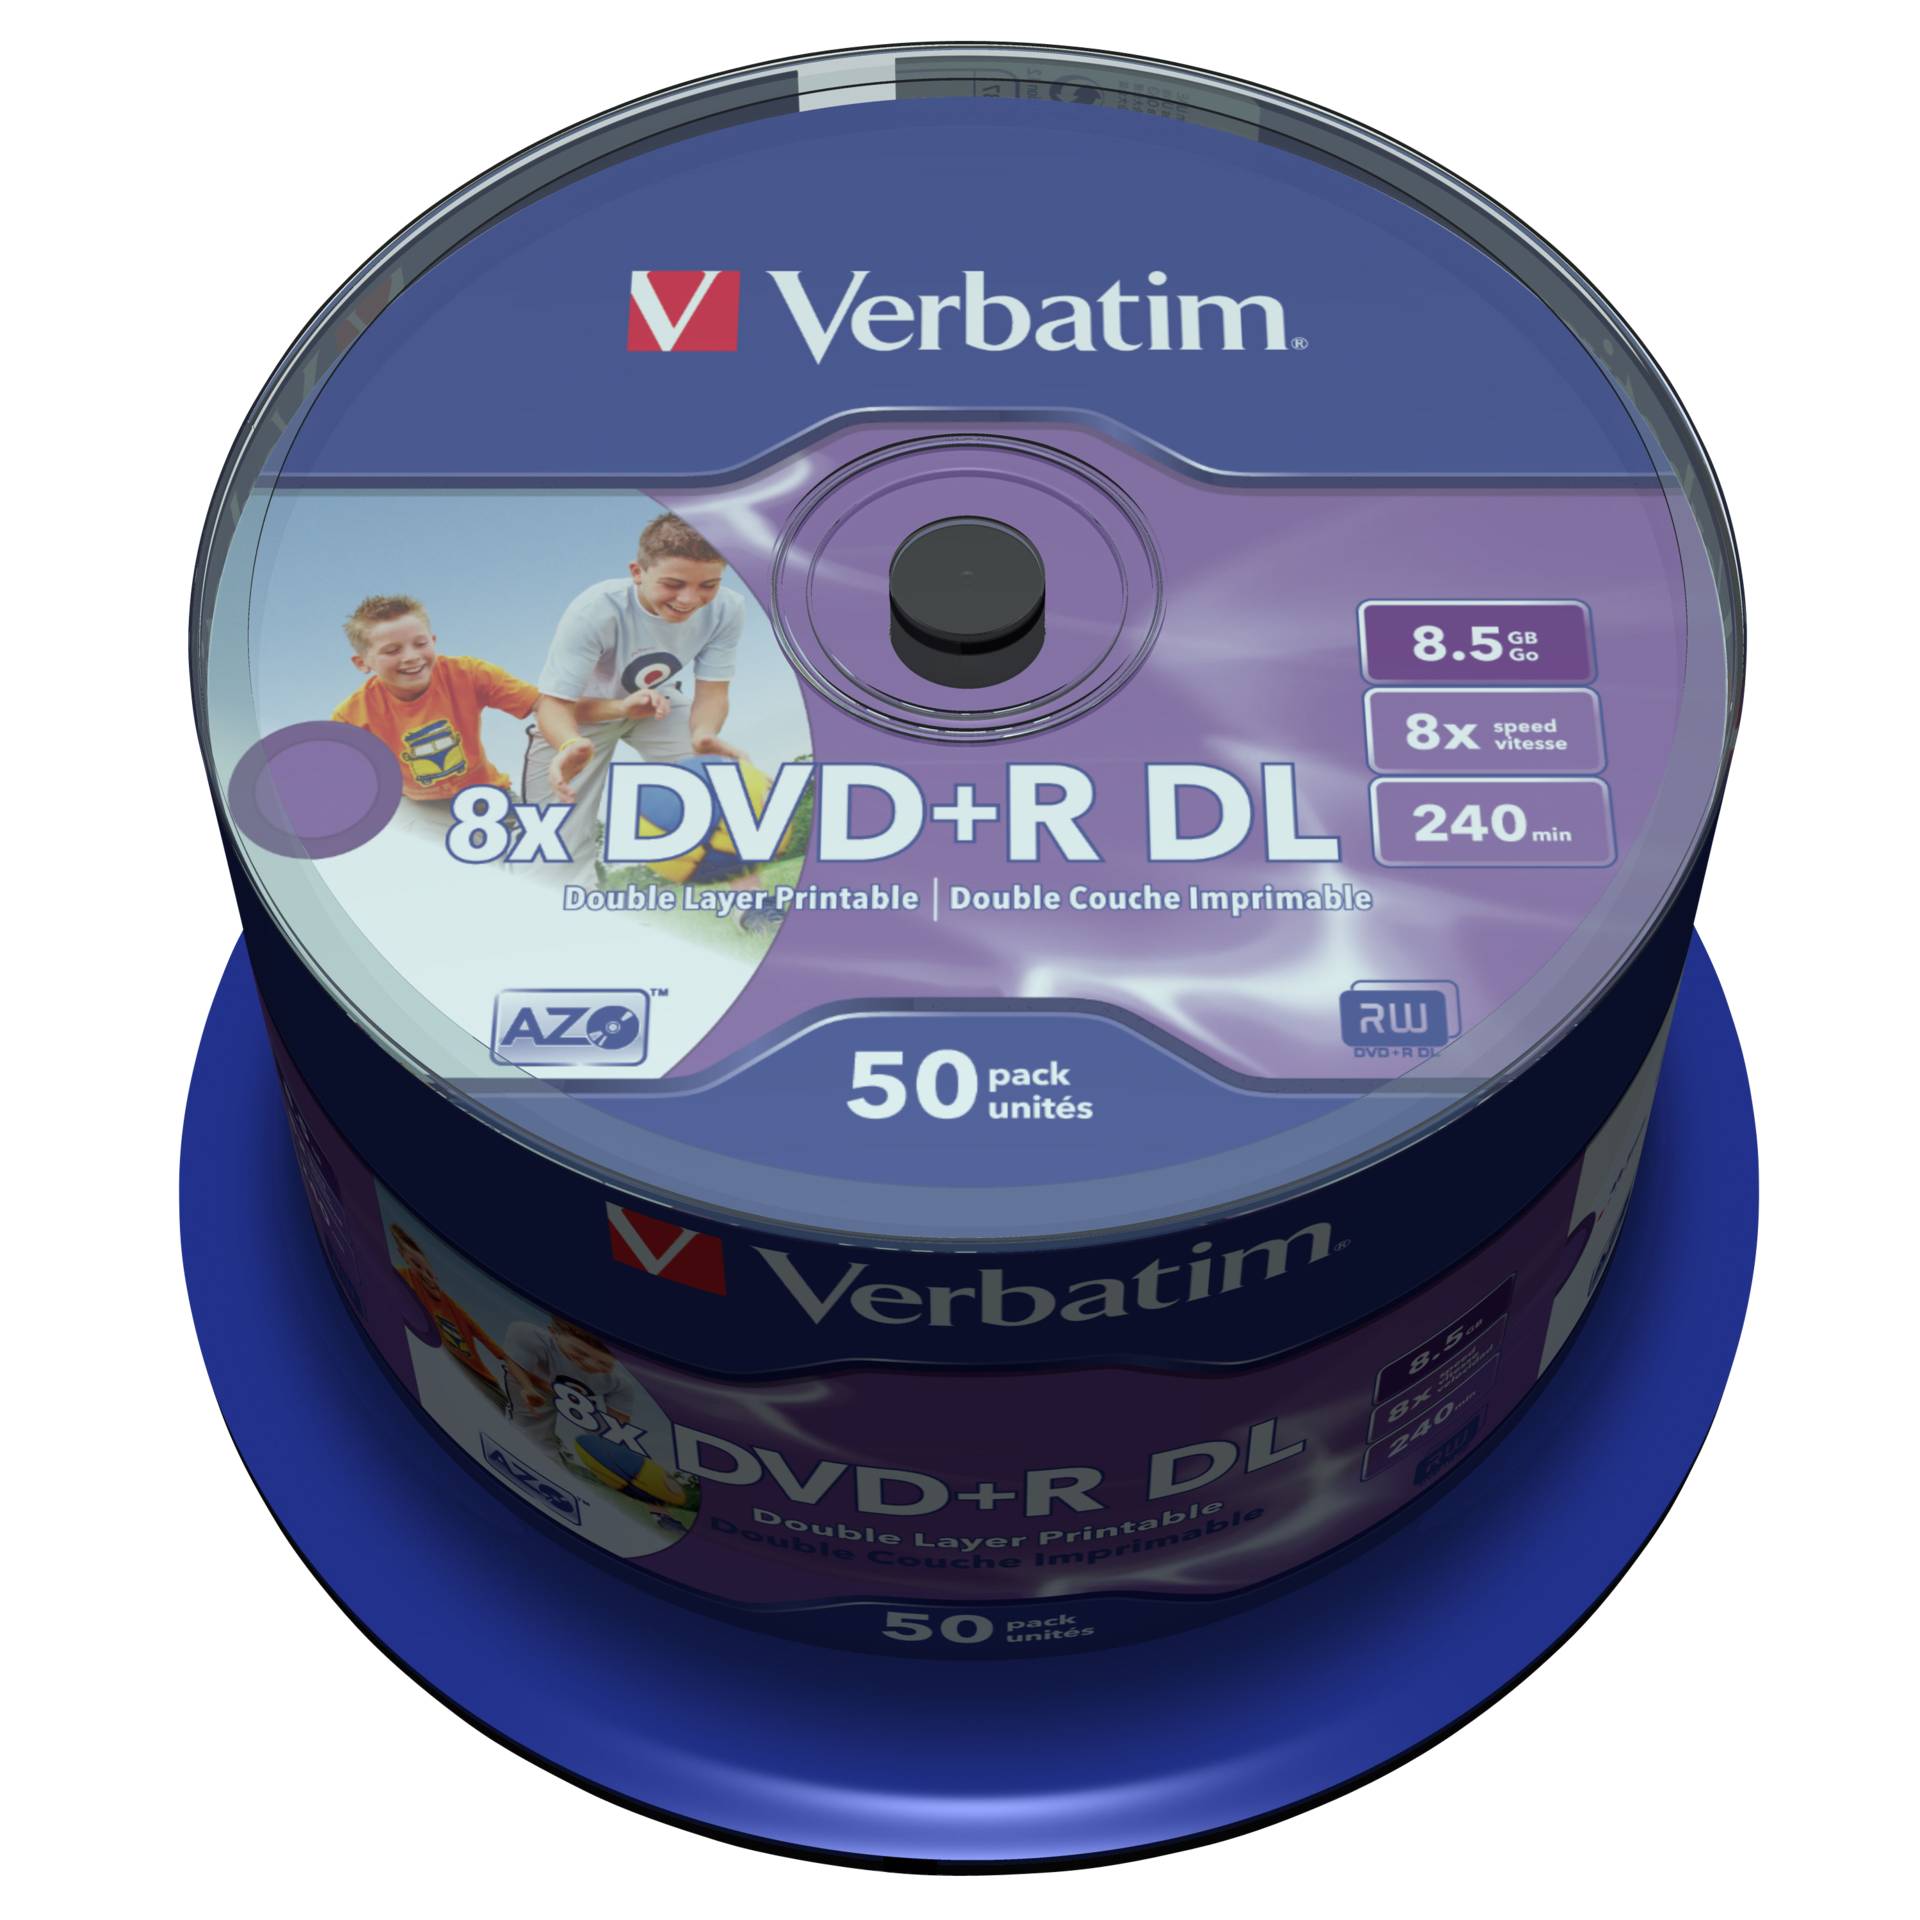 1x50 Verbatim DVD+R Double Layer 8x Speed, 8,5GB wide printa